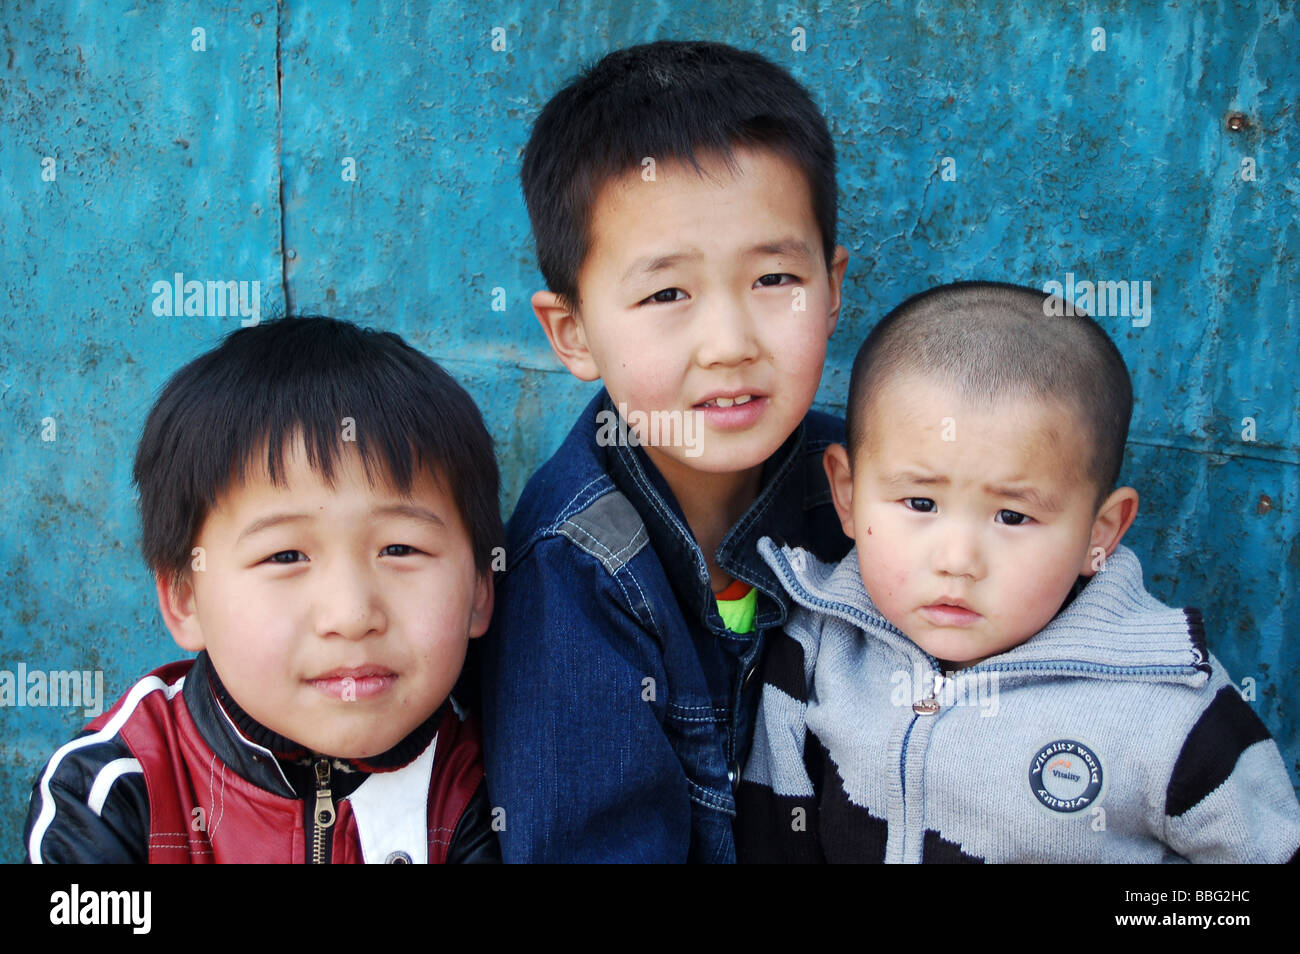 Local mongolian people from Ulaan Baatar (Ulan Bator), MONGOLIA Stock Photo